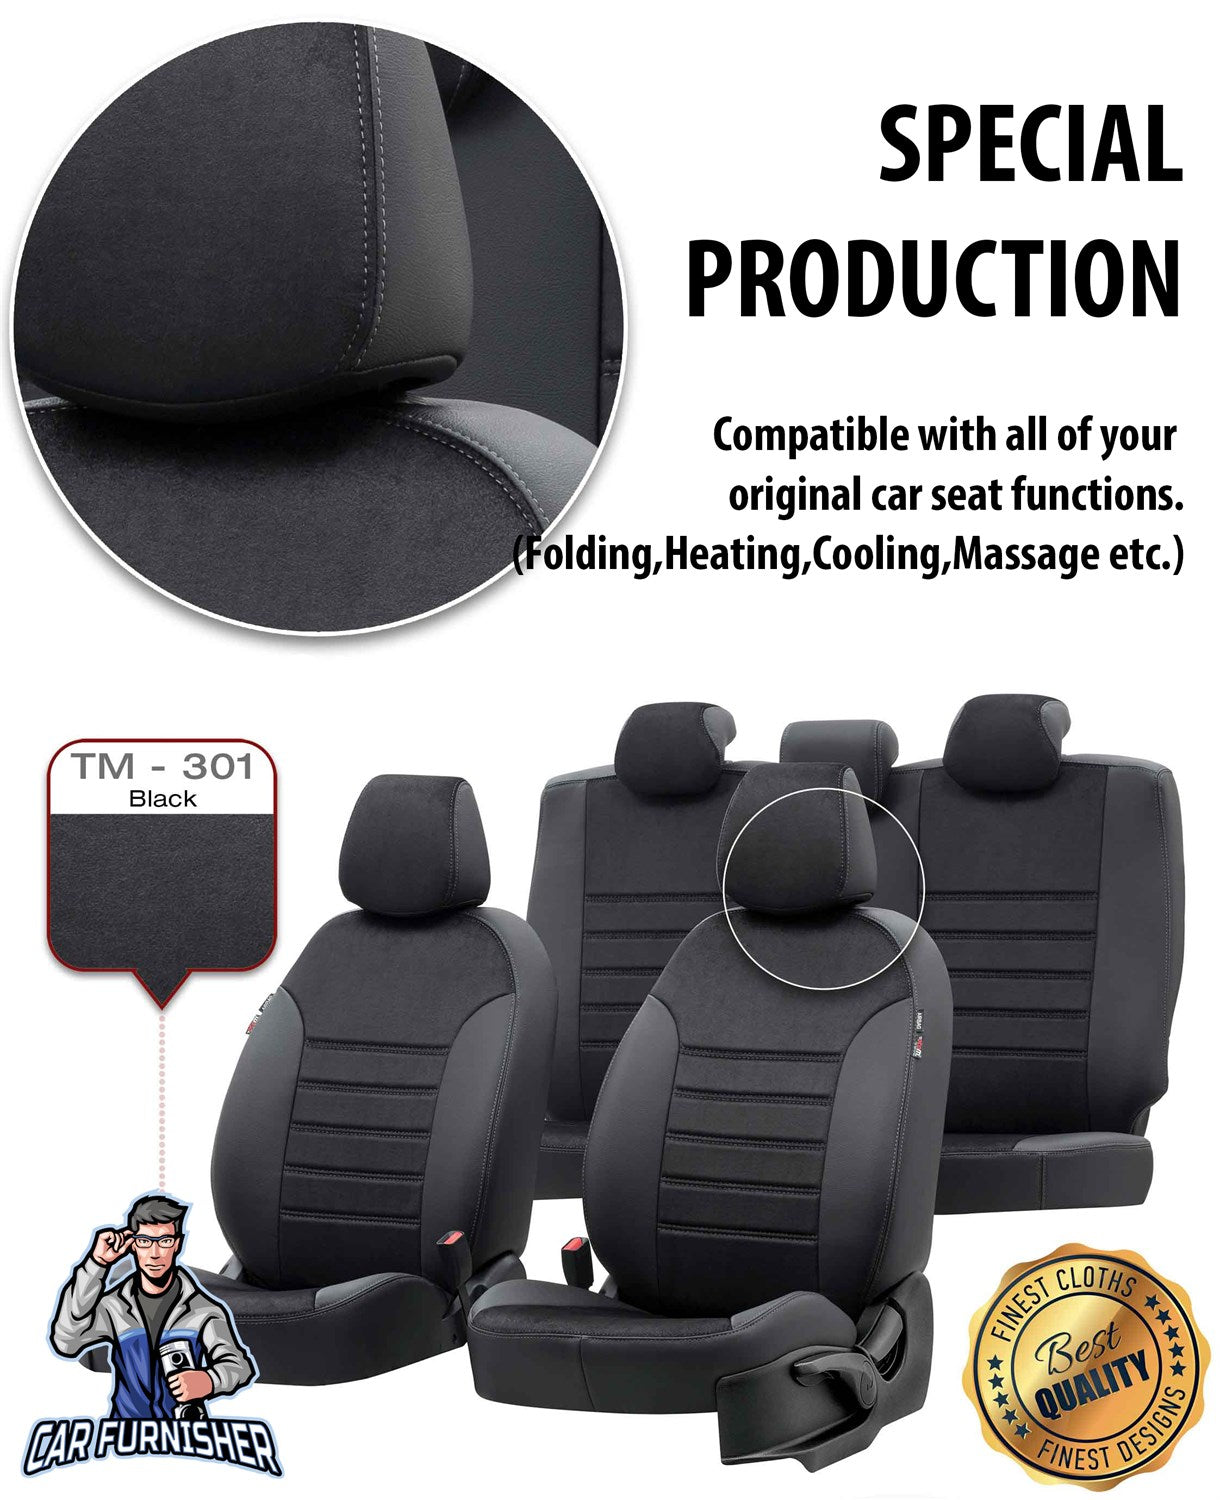 Fiat Tempra Seat Covers Milano Suede Design Beige Leather & Suede Fabric